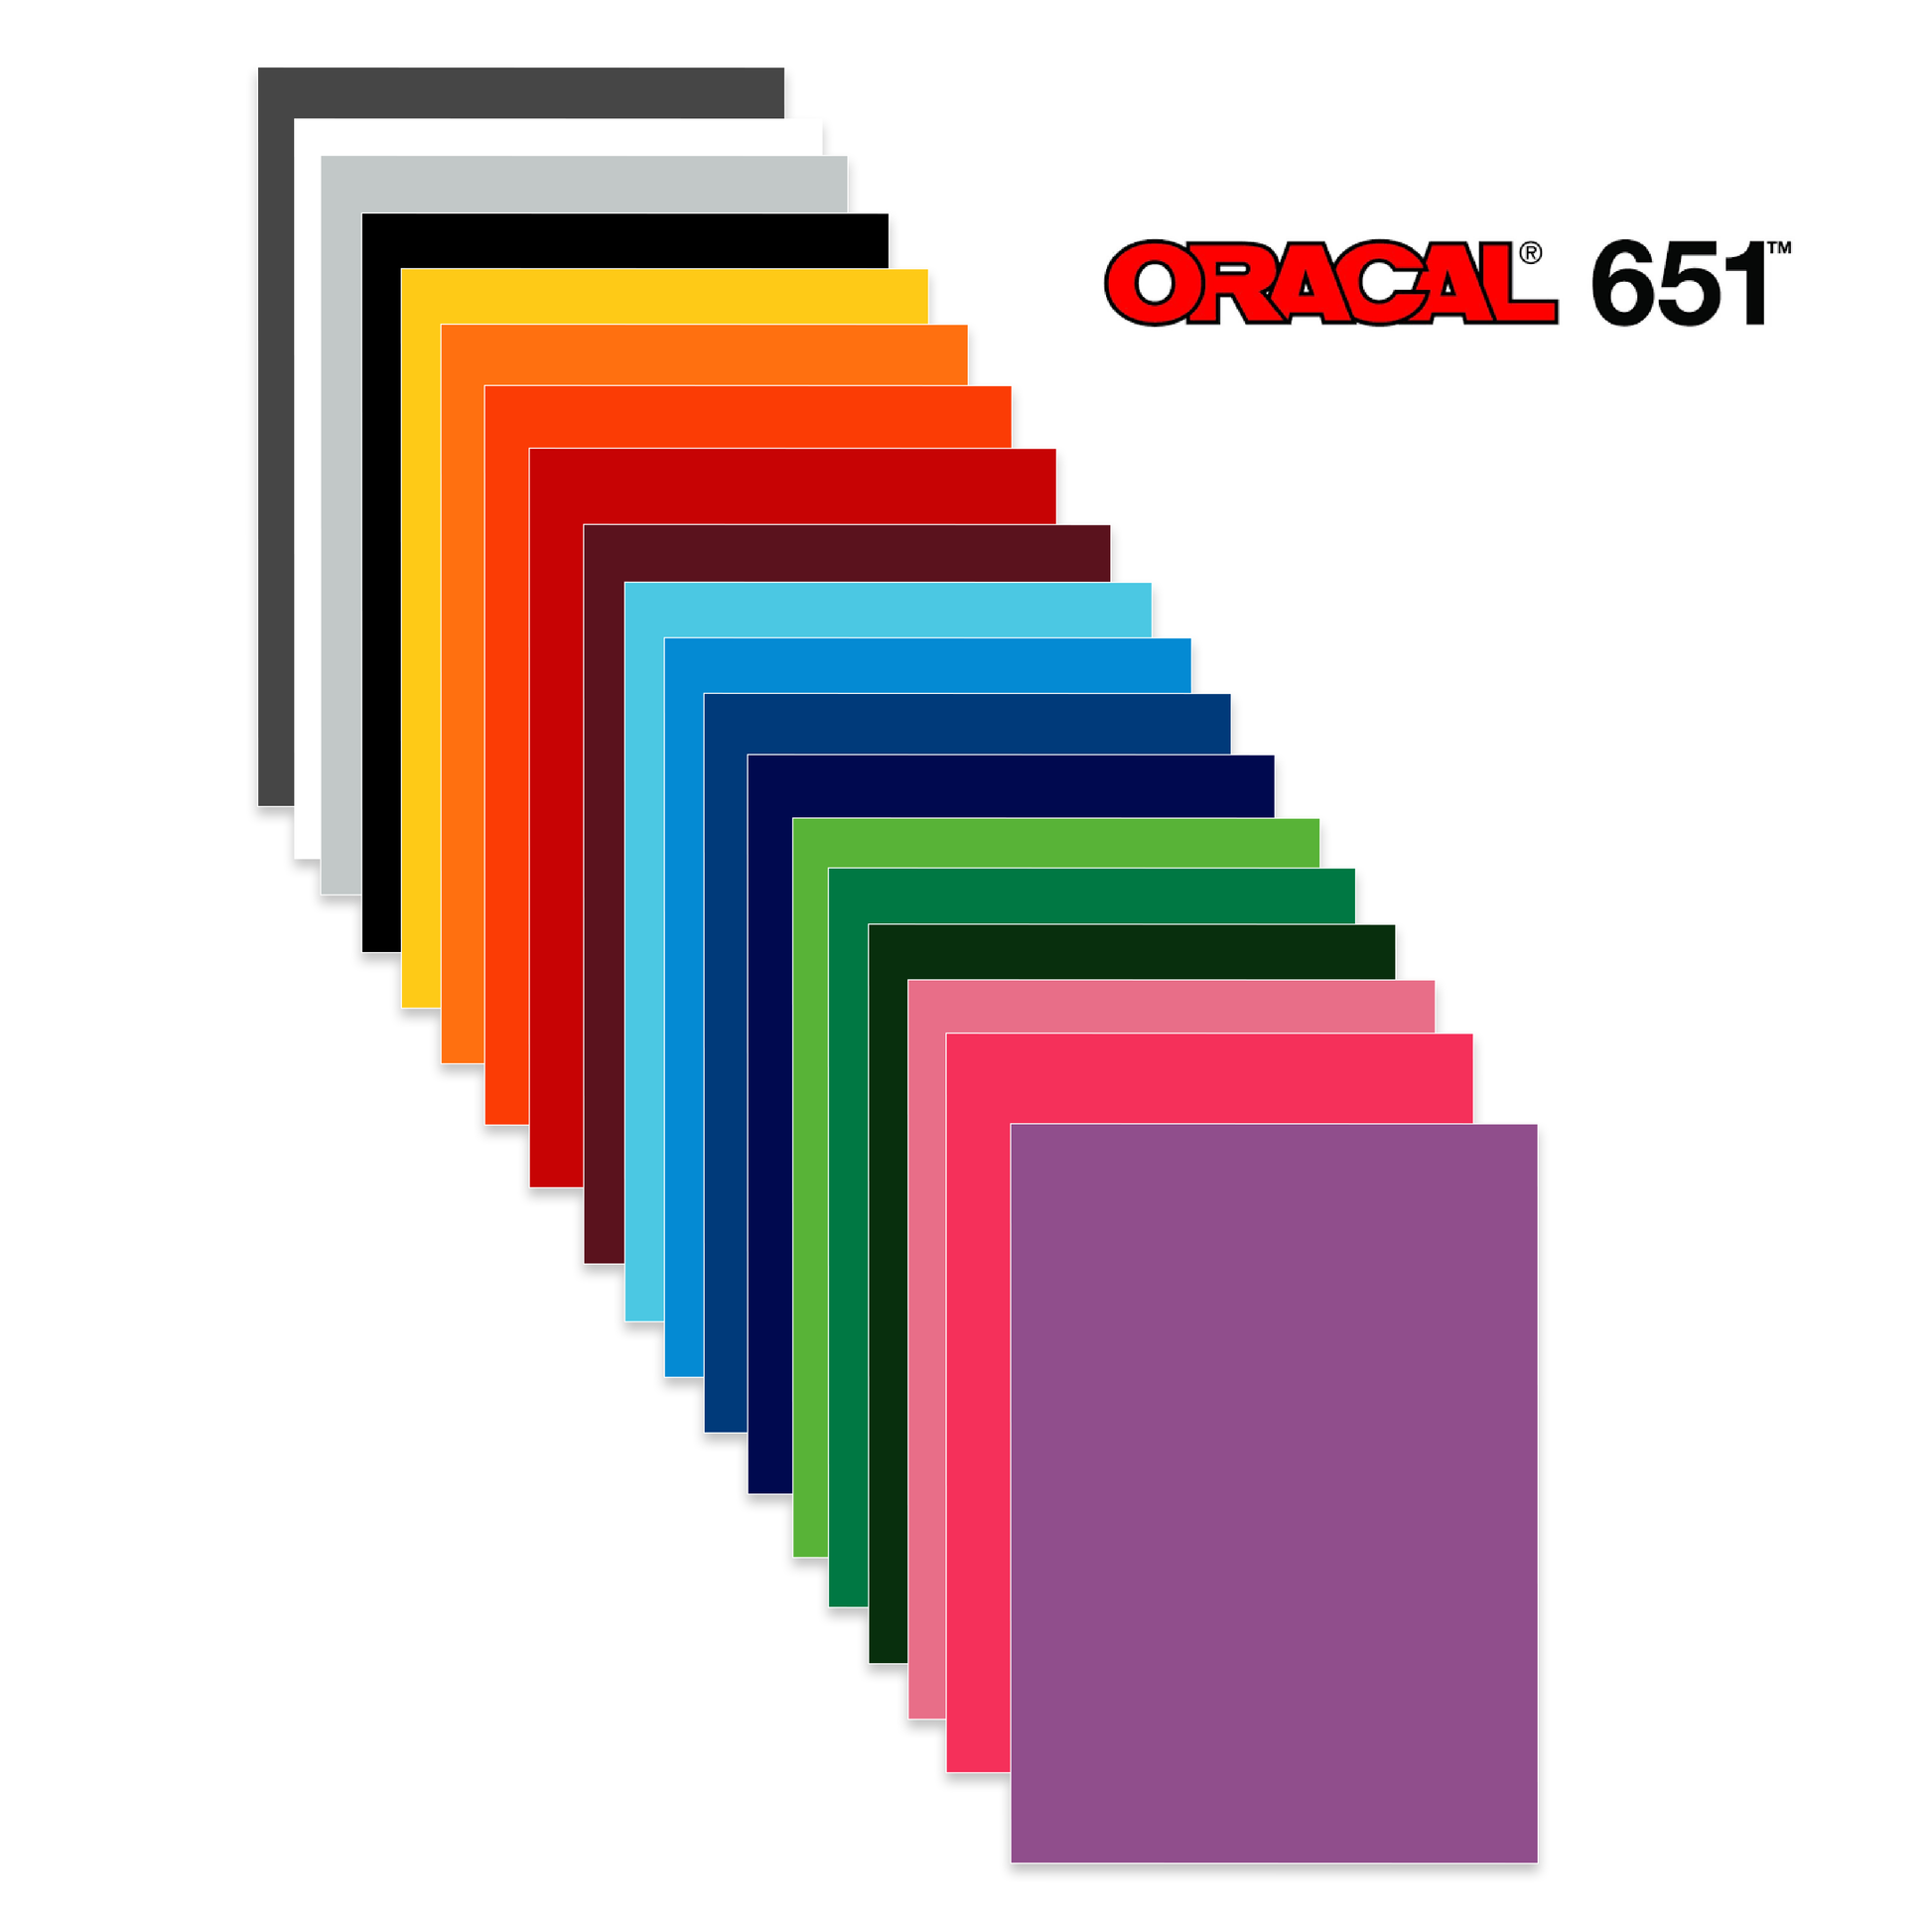 Oracal 651 Permanent Vinyl 24 in. x 5 yard